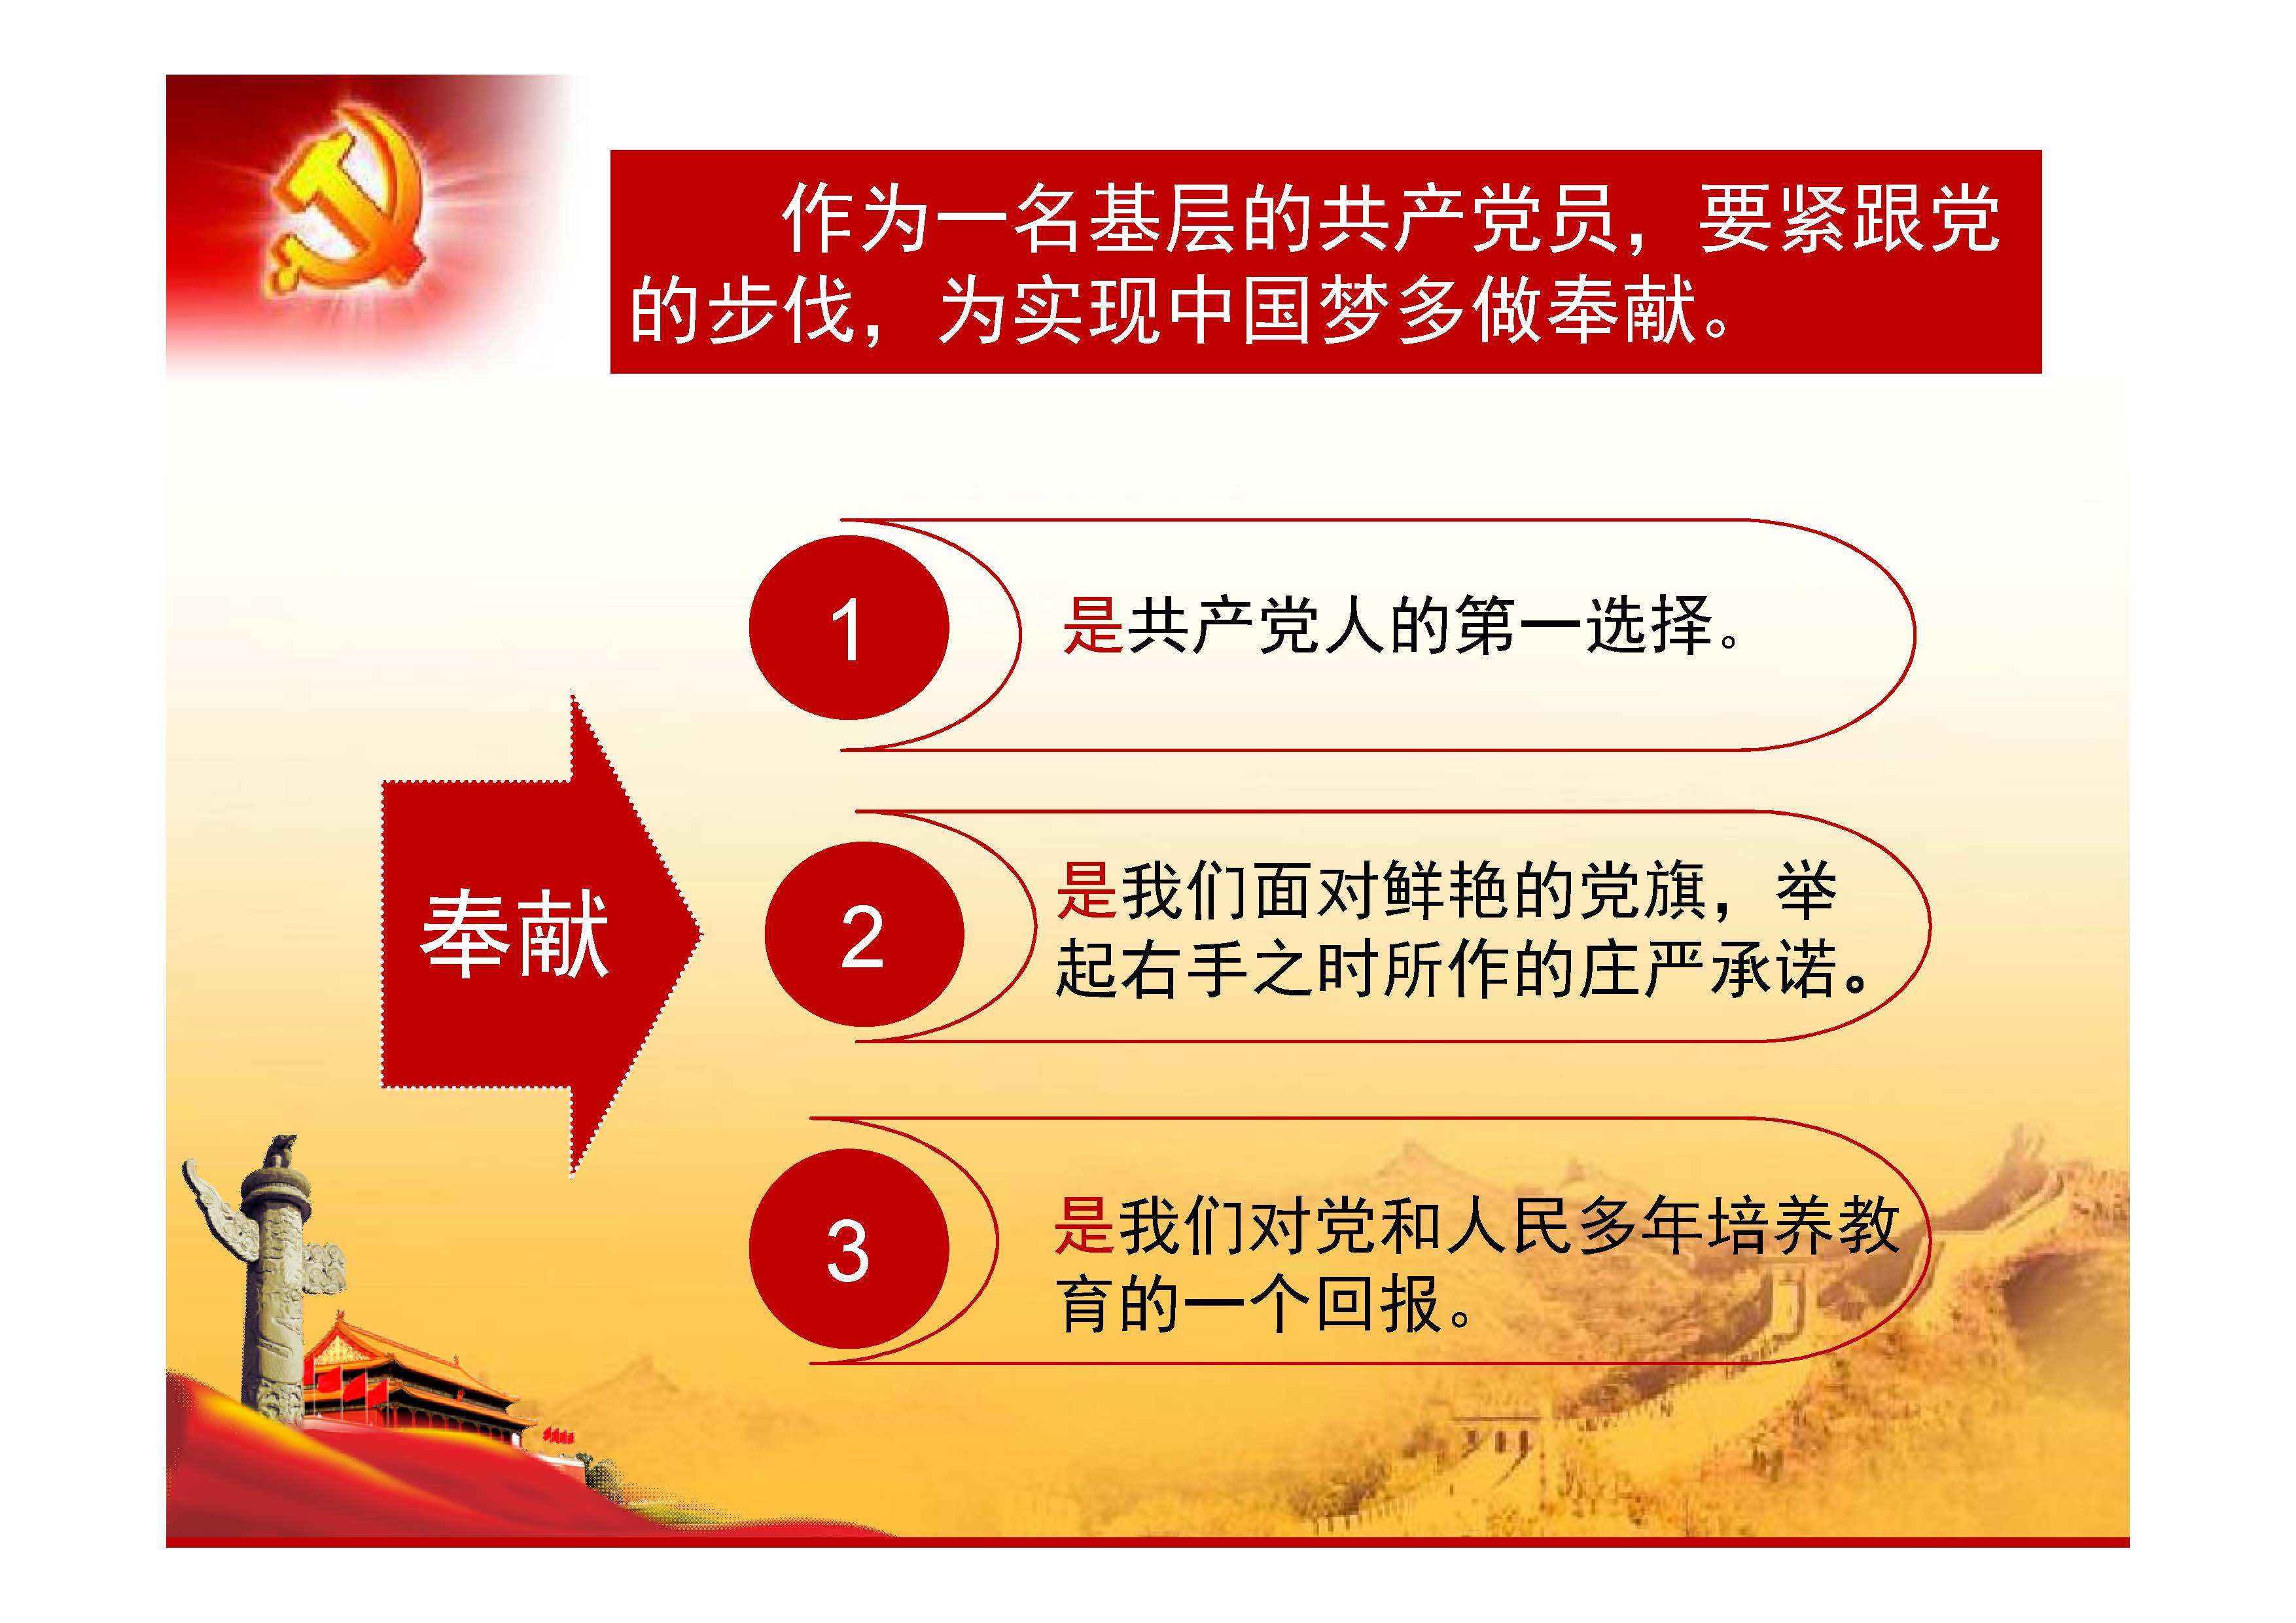 [PPT]中国兵器装备集团洛阳北方企业集团有限公司《做新时代合格党员 立足岗位讲奉献比作为》